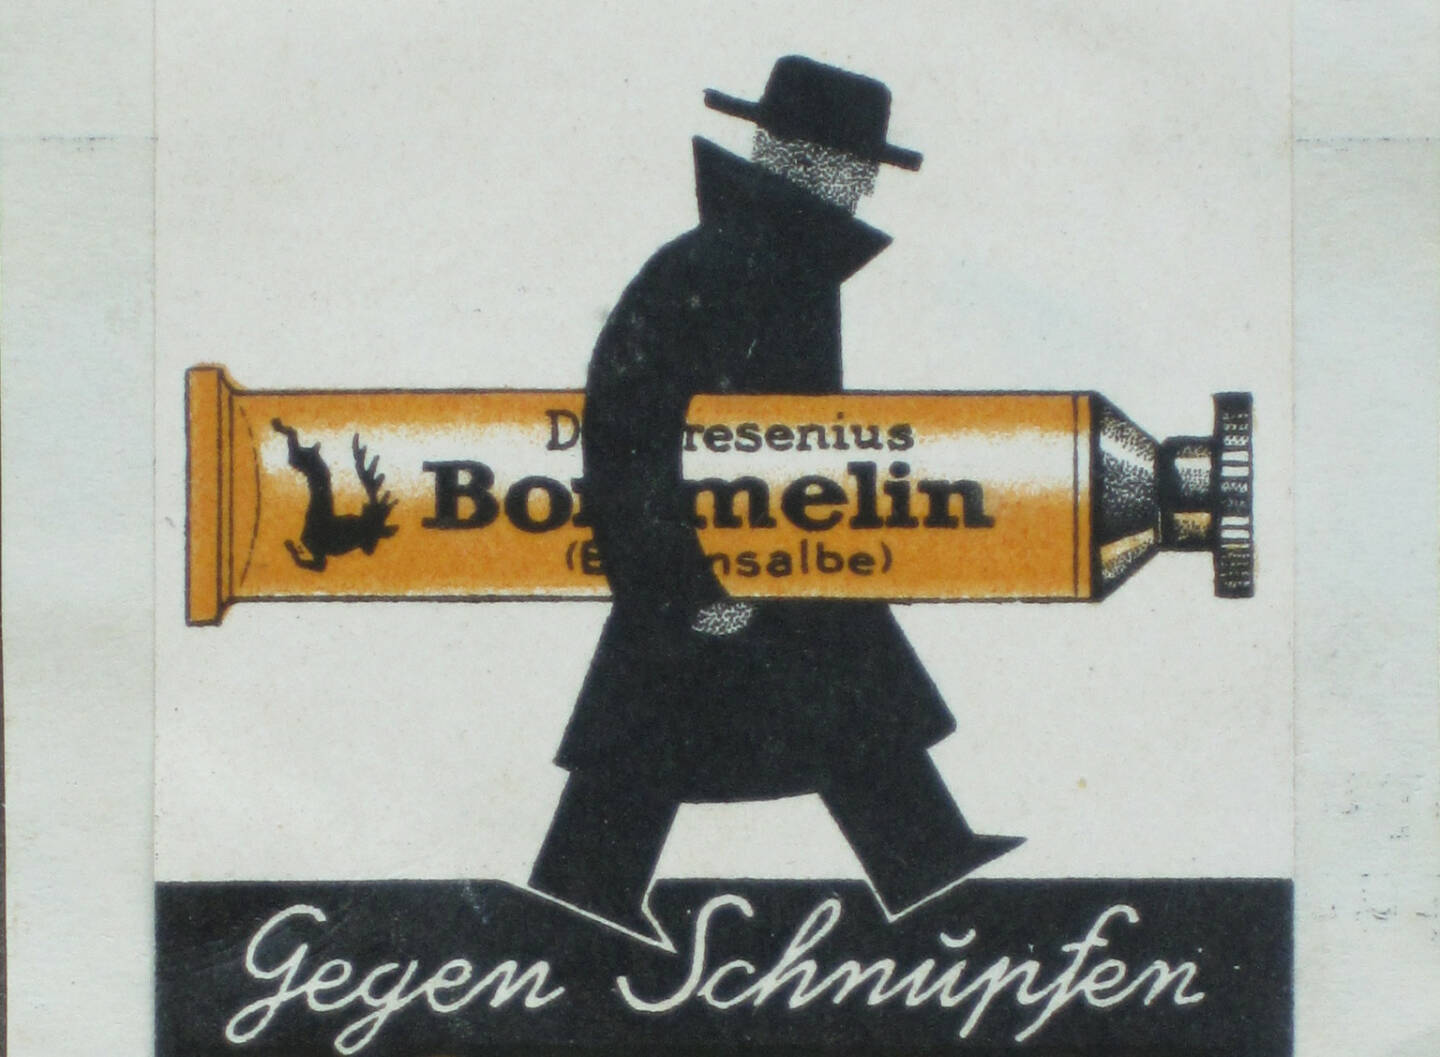 Werbeanzeige für Bormelin, Fresenius AG